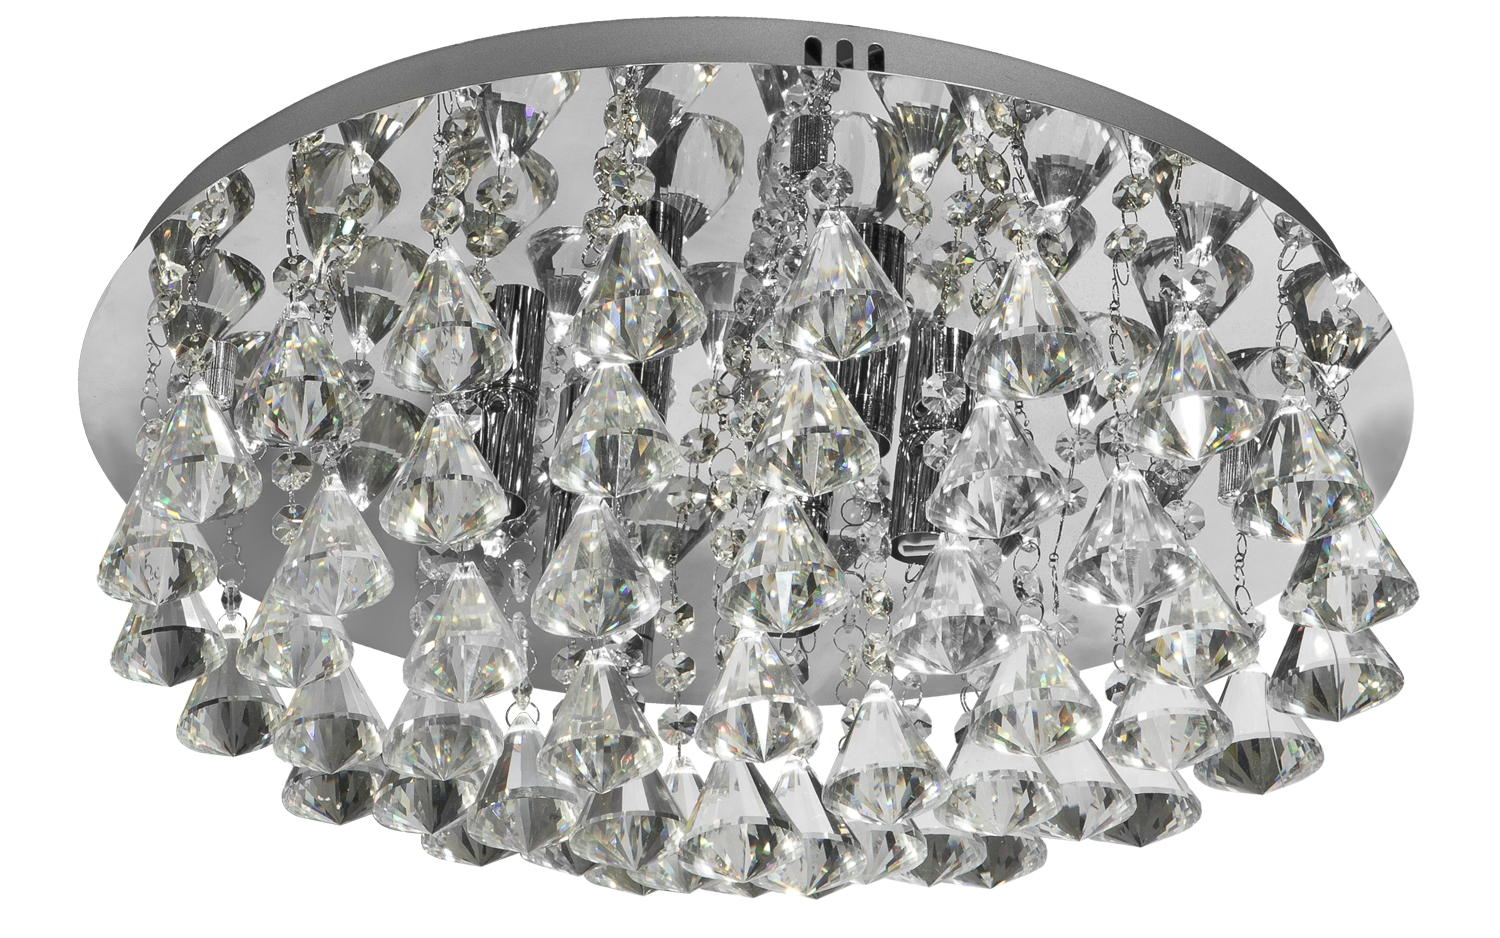 Lampa sufitowa plafon krysztaowy Hanna 3303-6CC